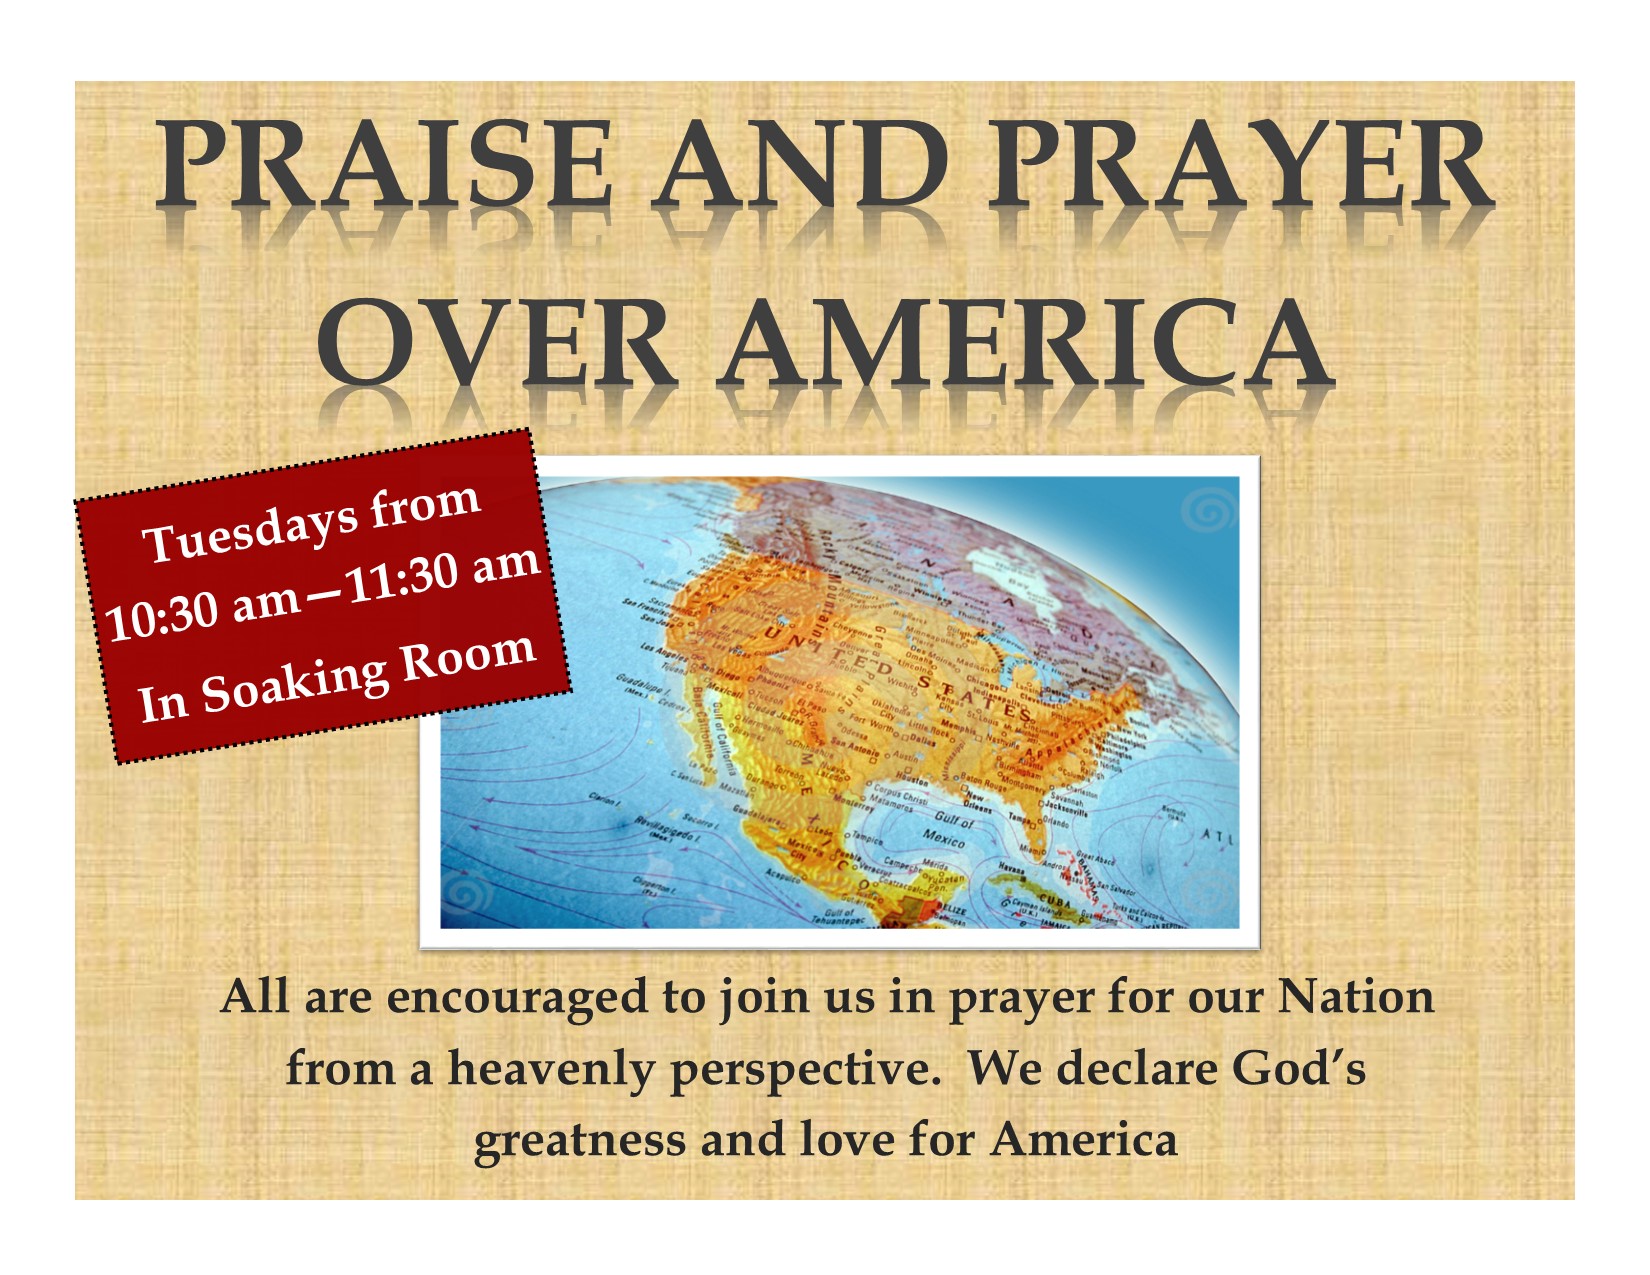 Prayer and Praise over America